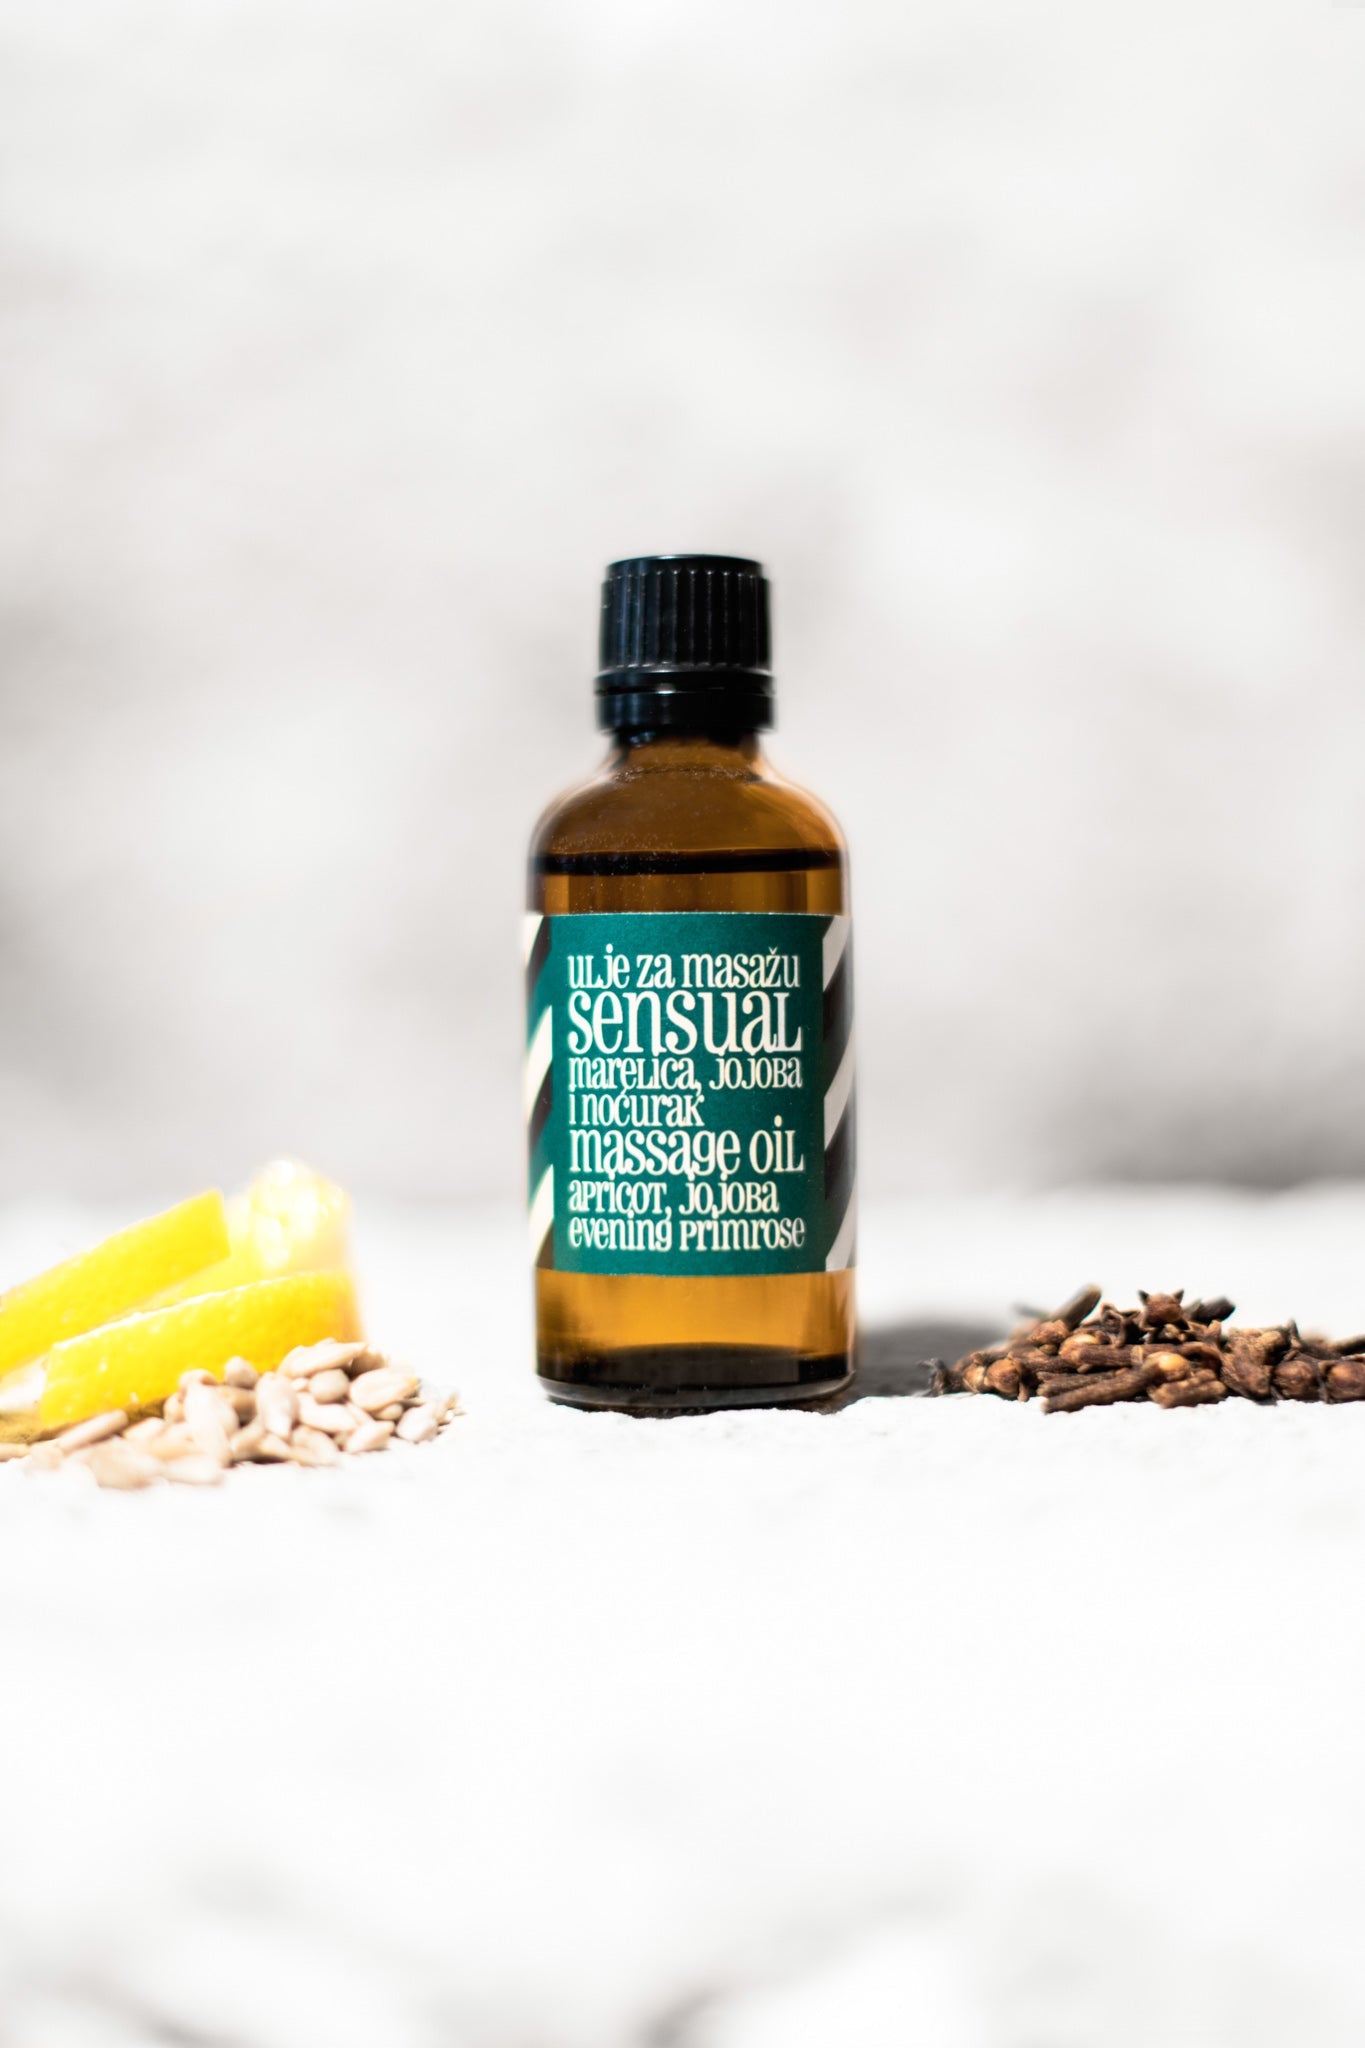 Massage oil "Sensual" [apricot kernel and jojoba oils]